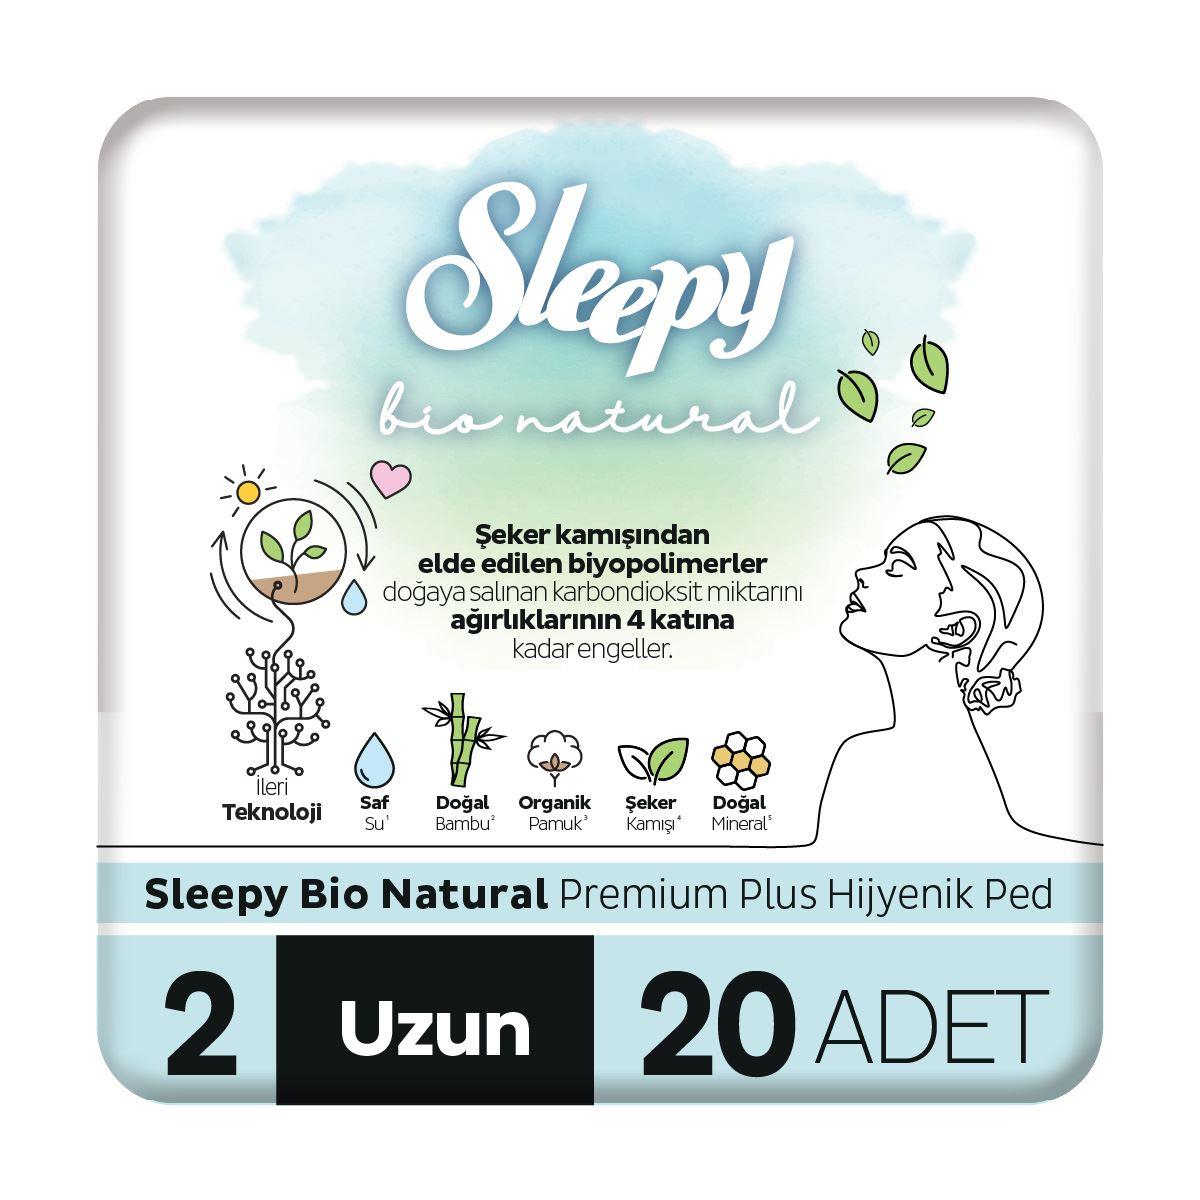 Sleepy Bio Natural Premium Plus Hijyenik Ped Uzun 20x3 60 Adet Ped